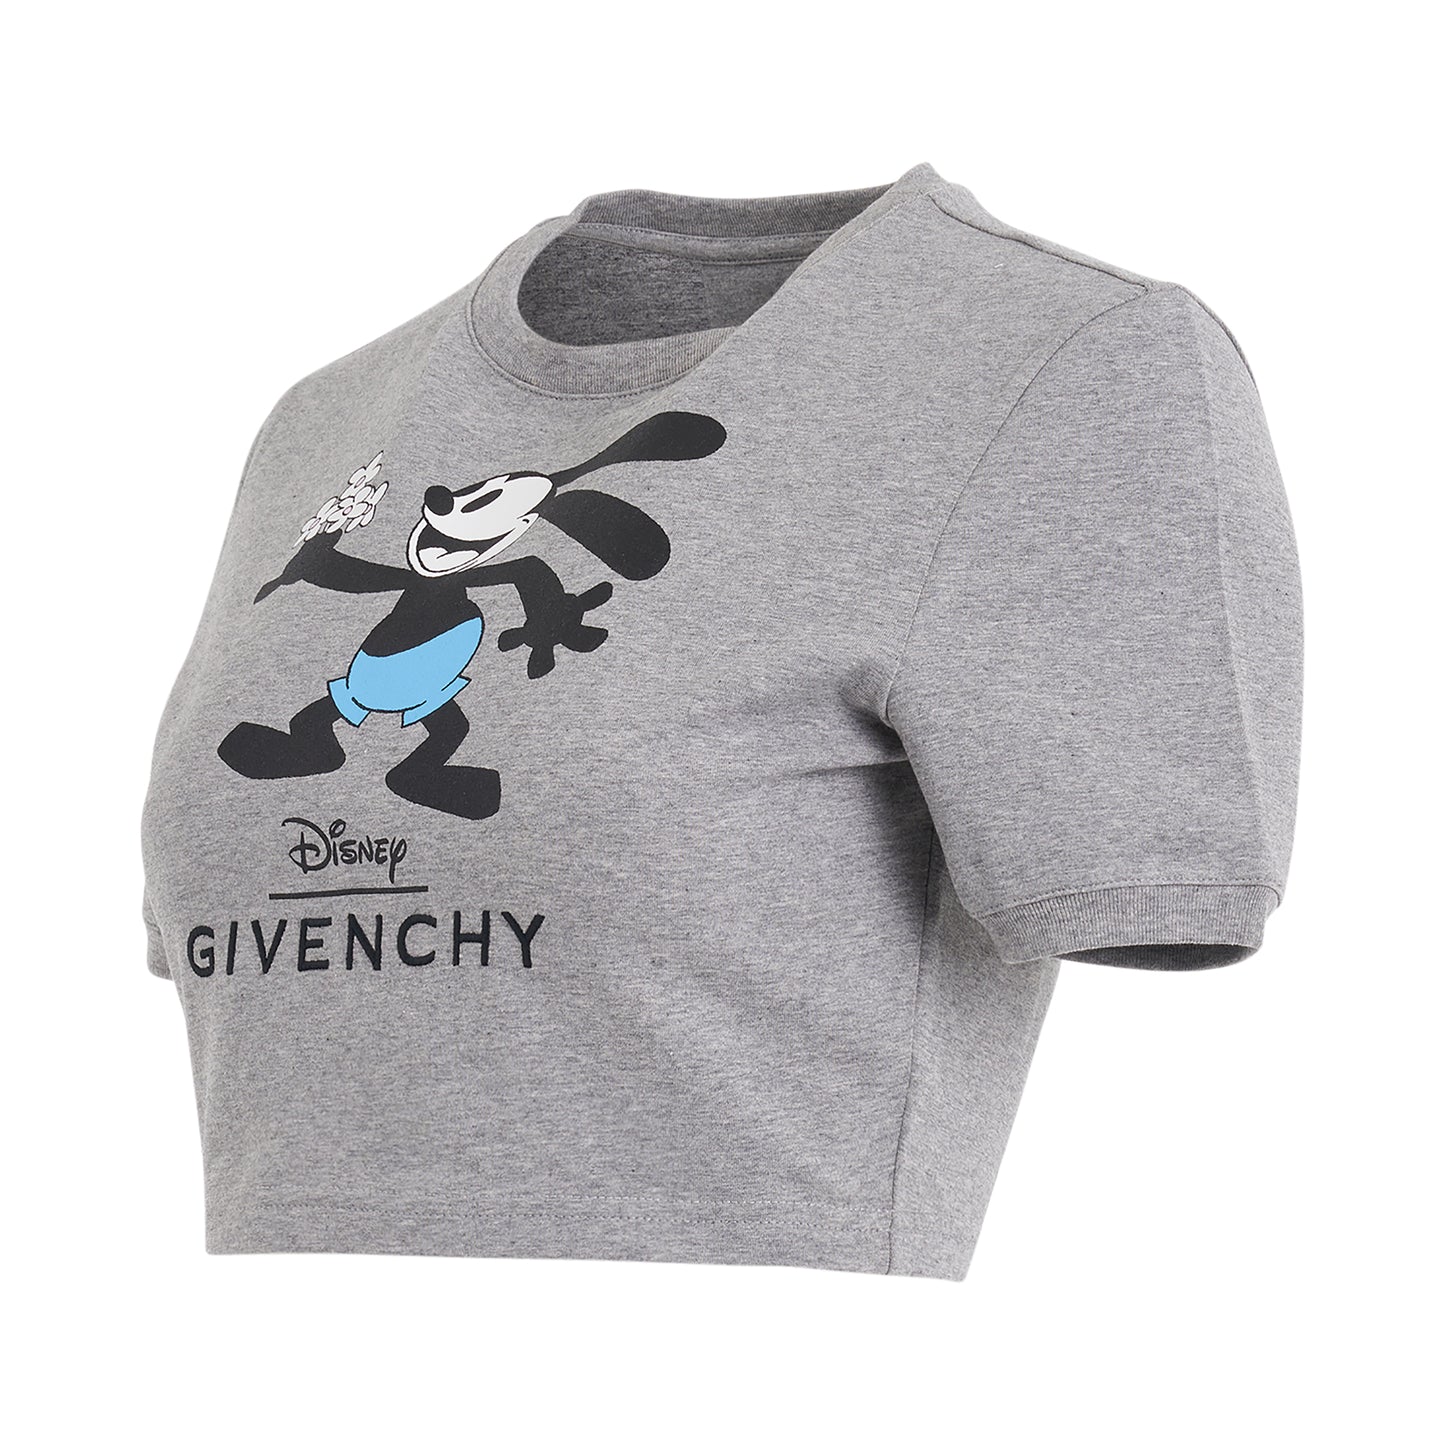 Disney Oswald Flowers T-Shirt in Light Grey